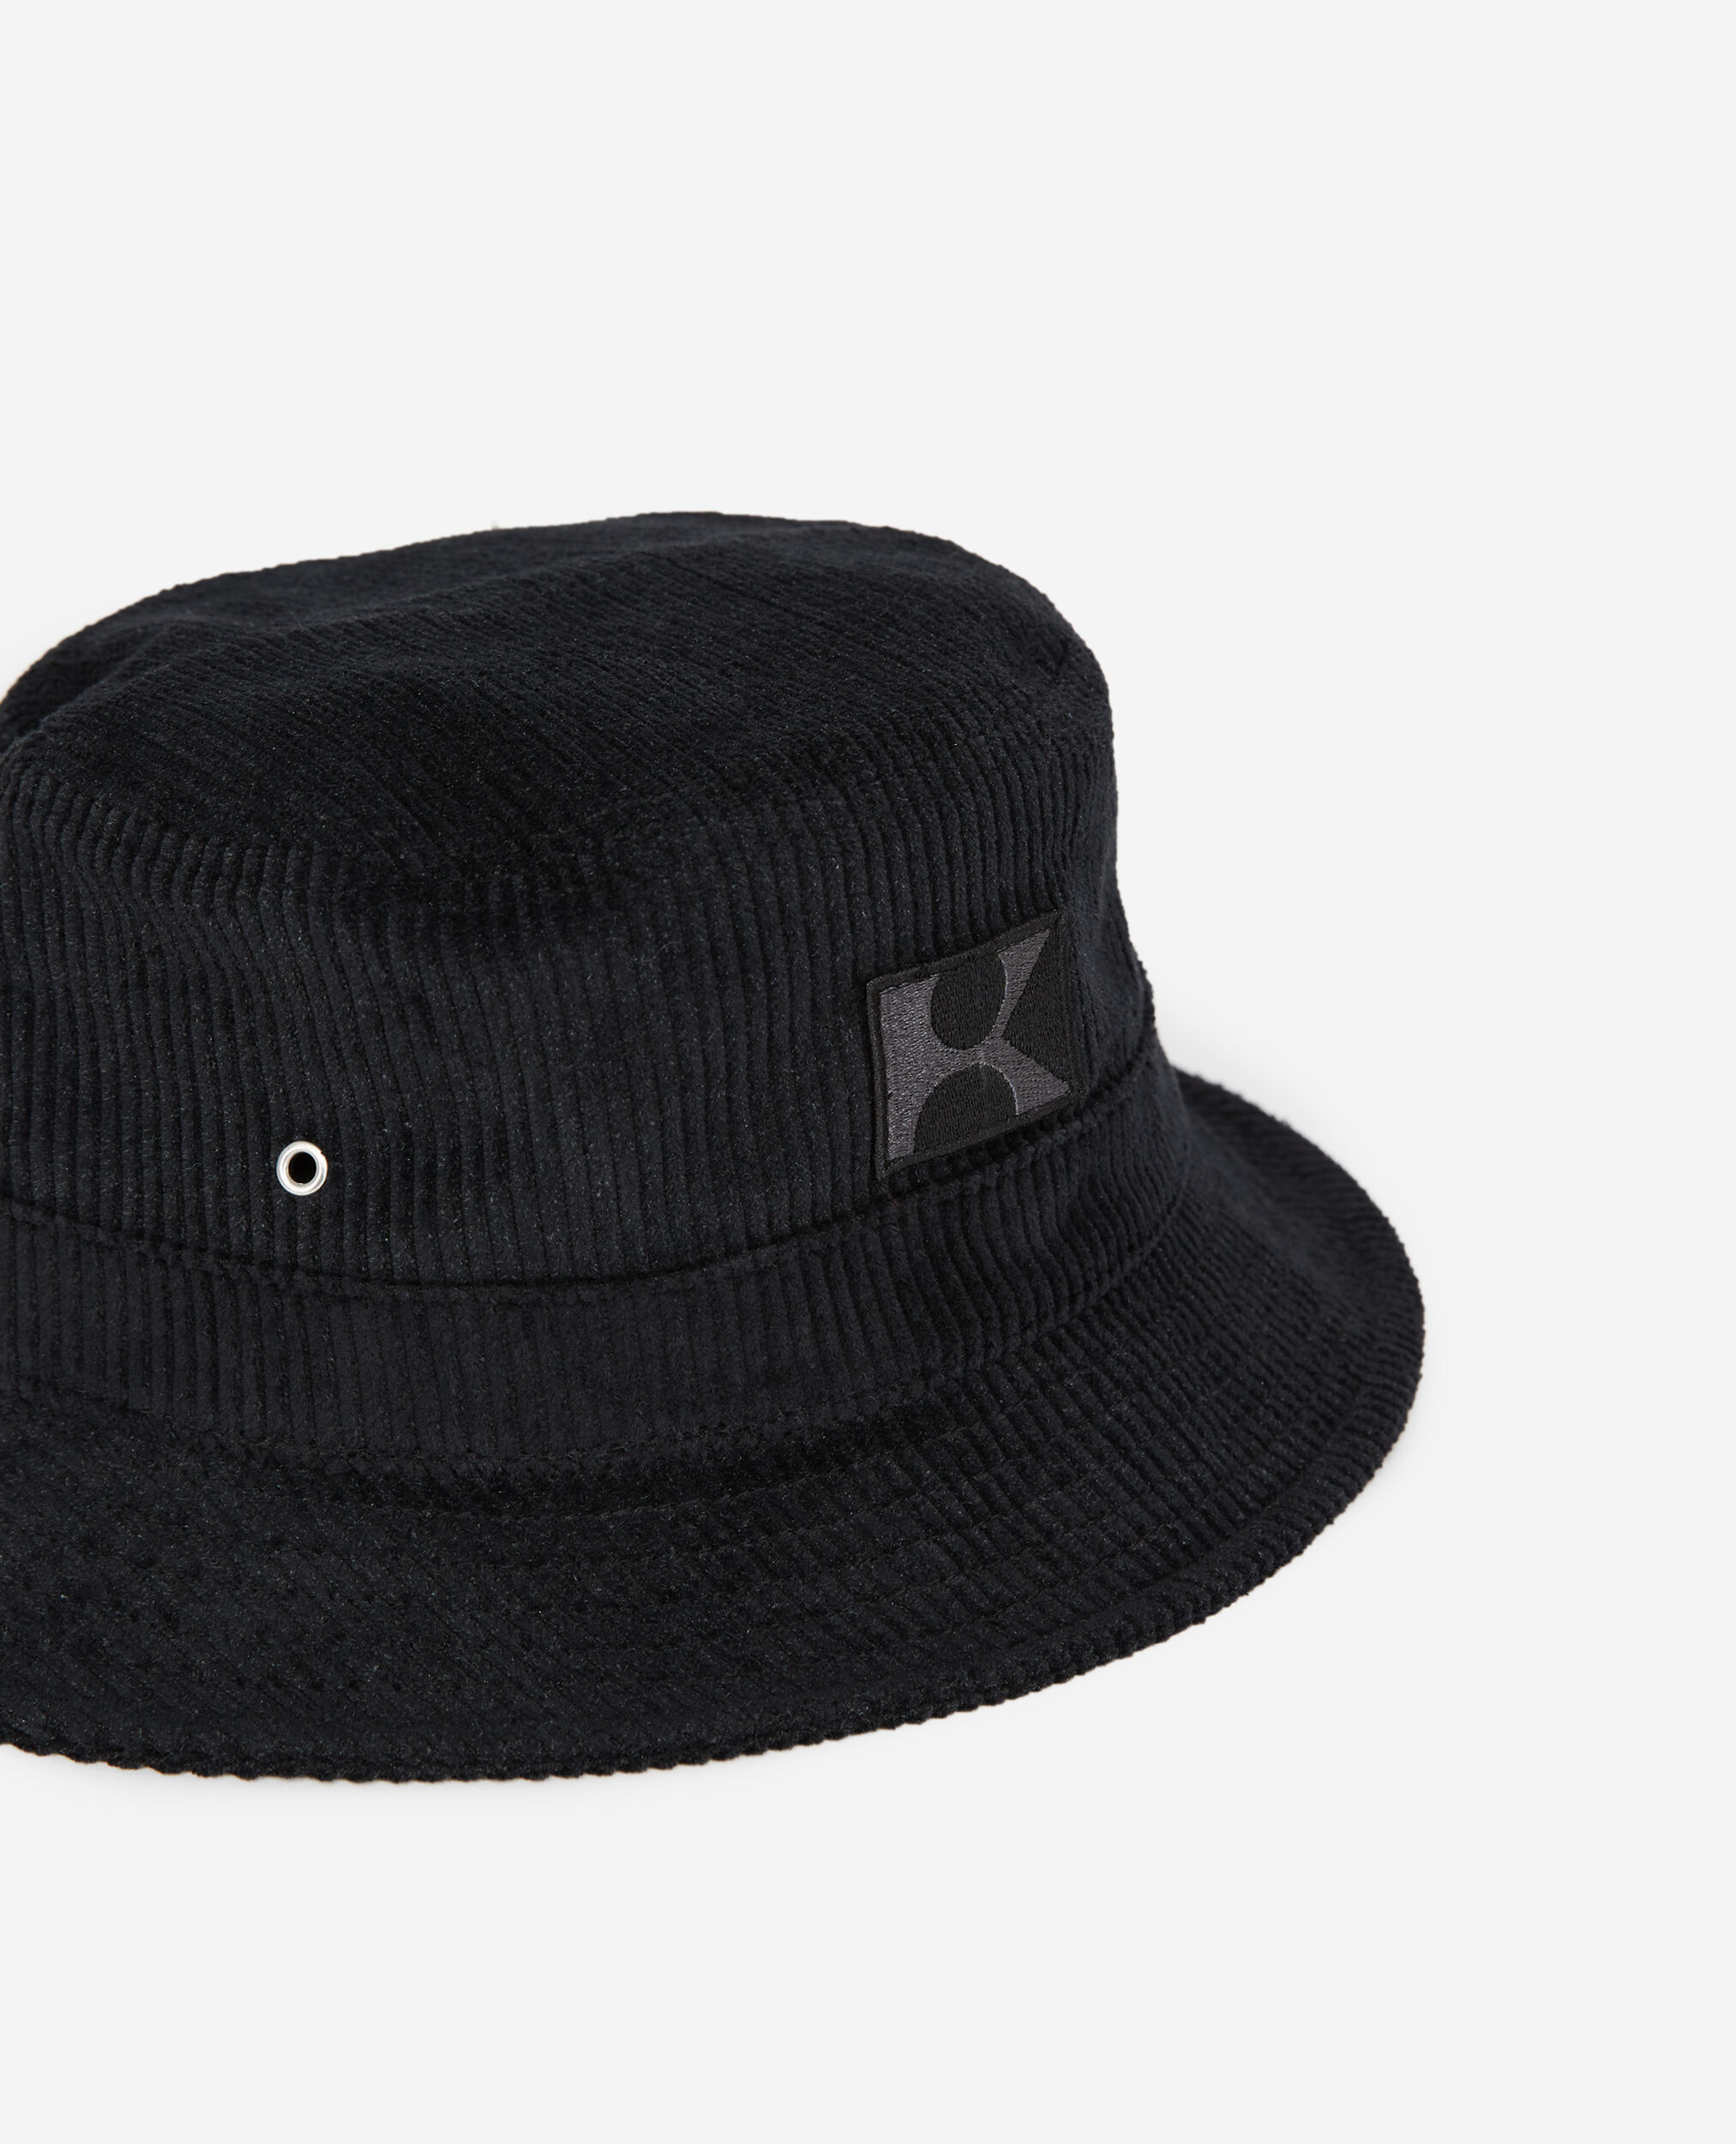 Sombrero bob pana negra bordado K, BLACK, hi-res image number null